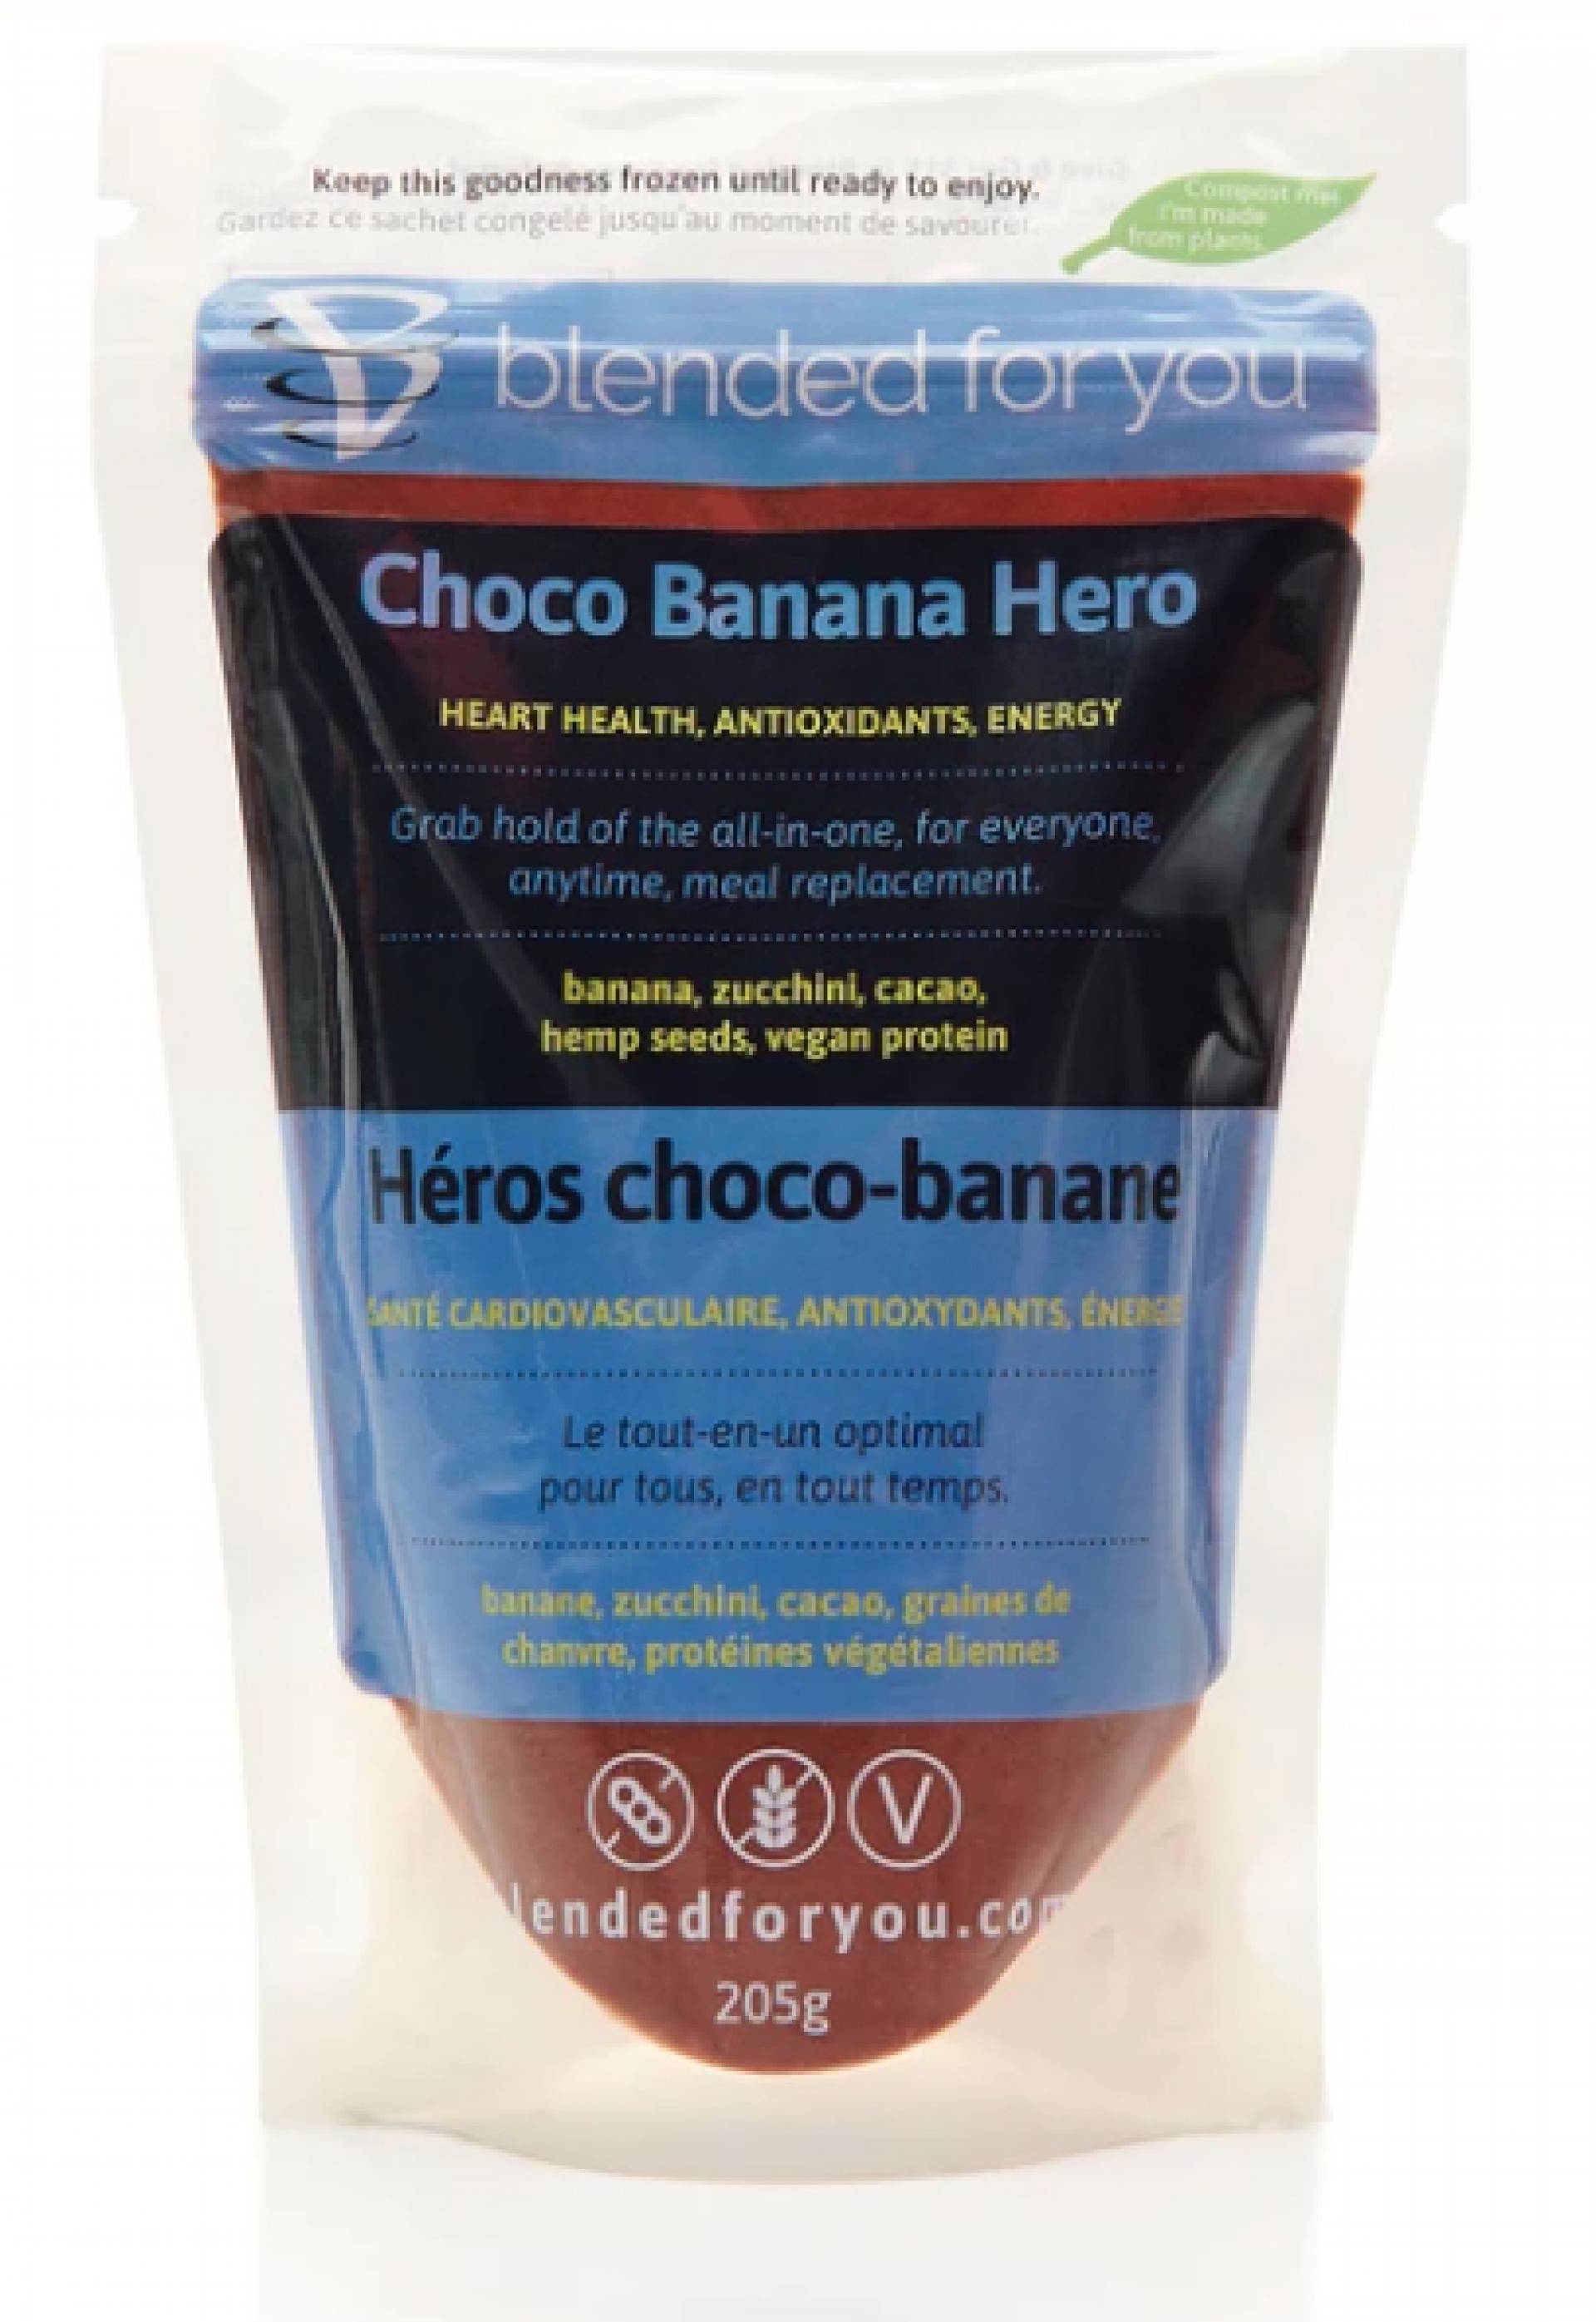 The Choco Banana Smoothie